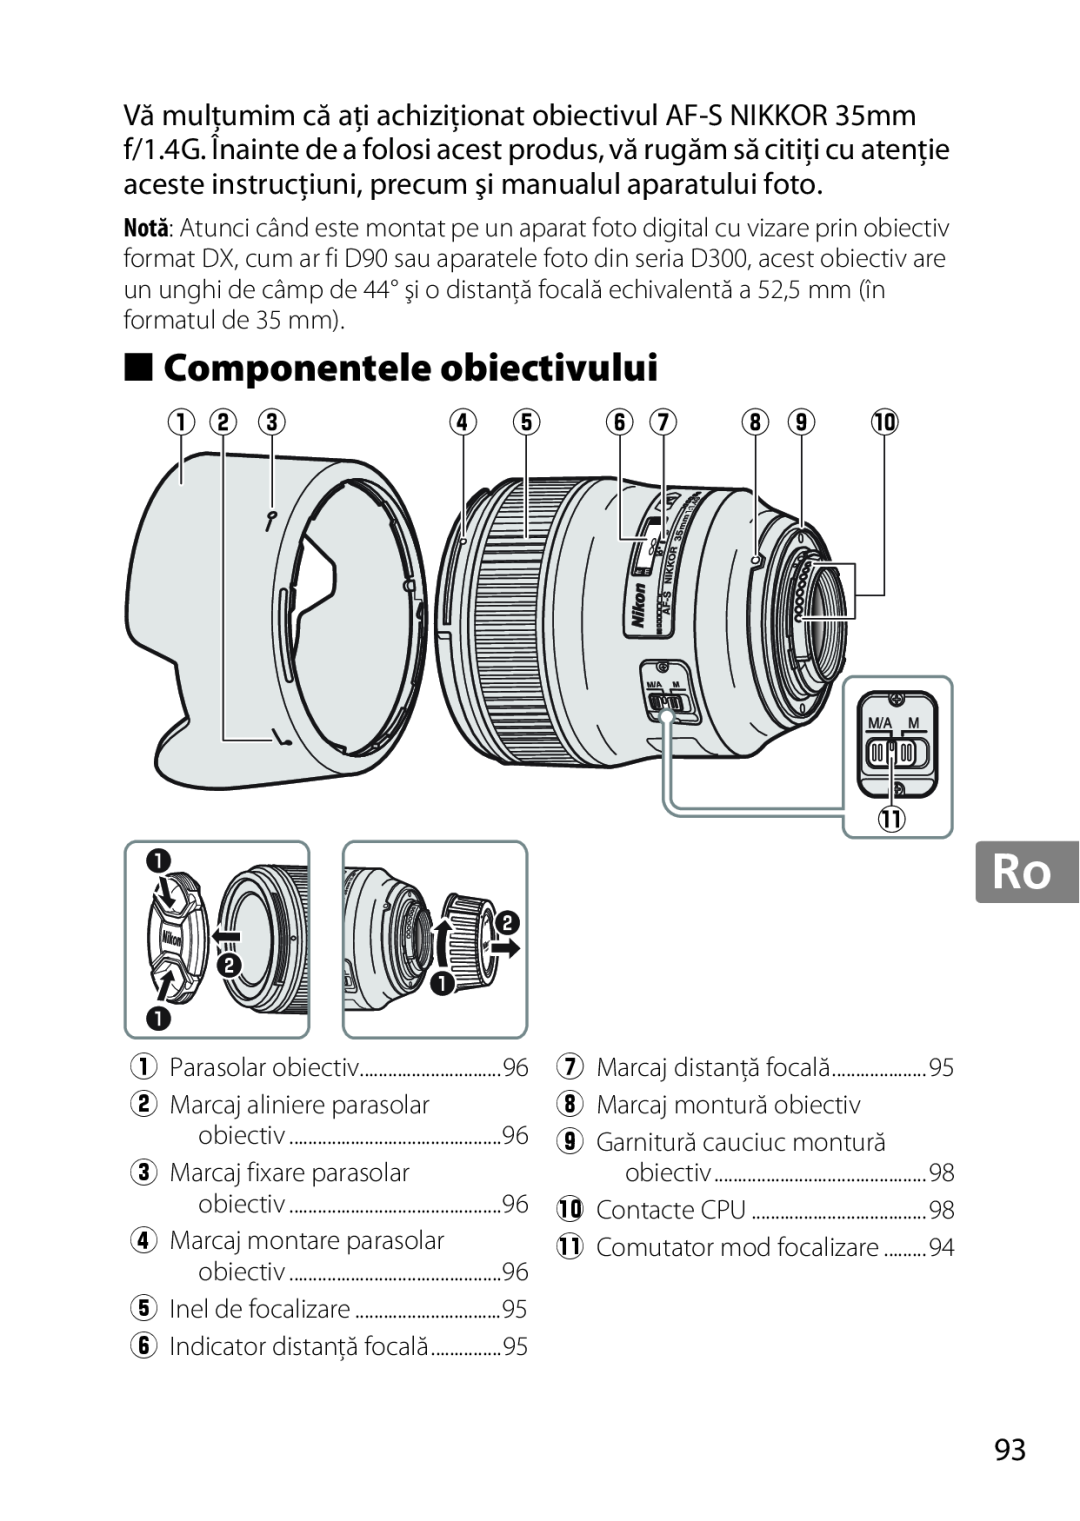 Nikon 35mmf14G, AF-S, 35mm f/1.4G, 2198 user manual Componentele obiectivului, q w e, y u i o !0 1 